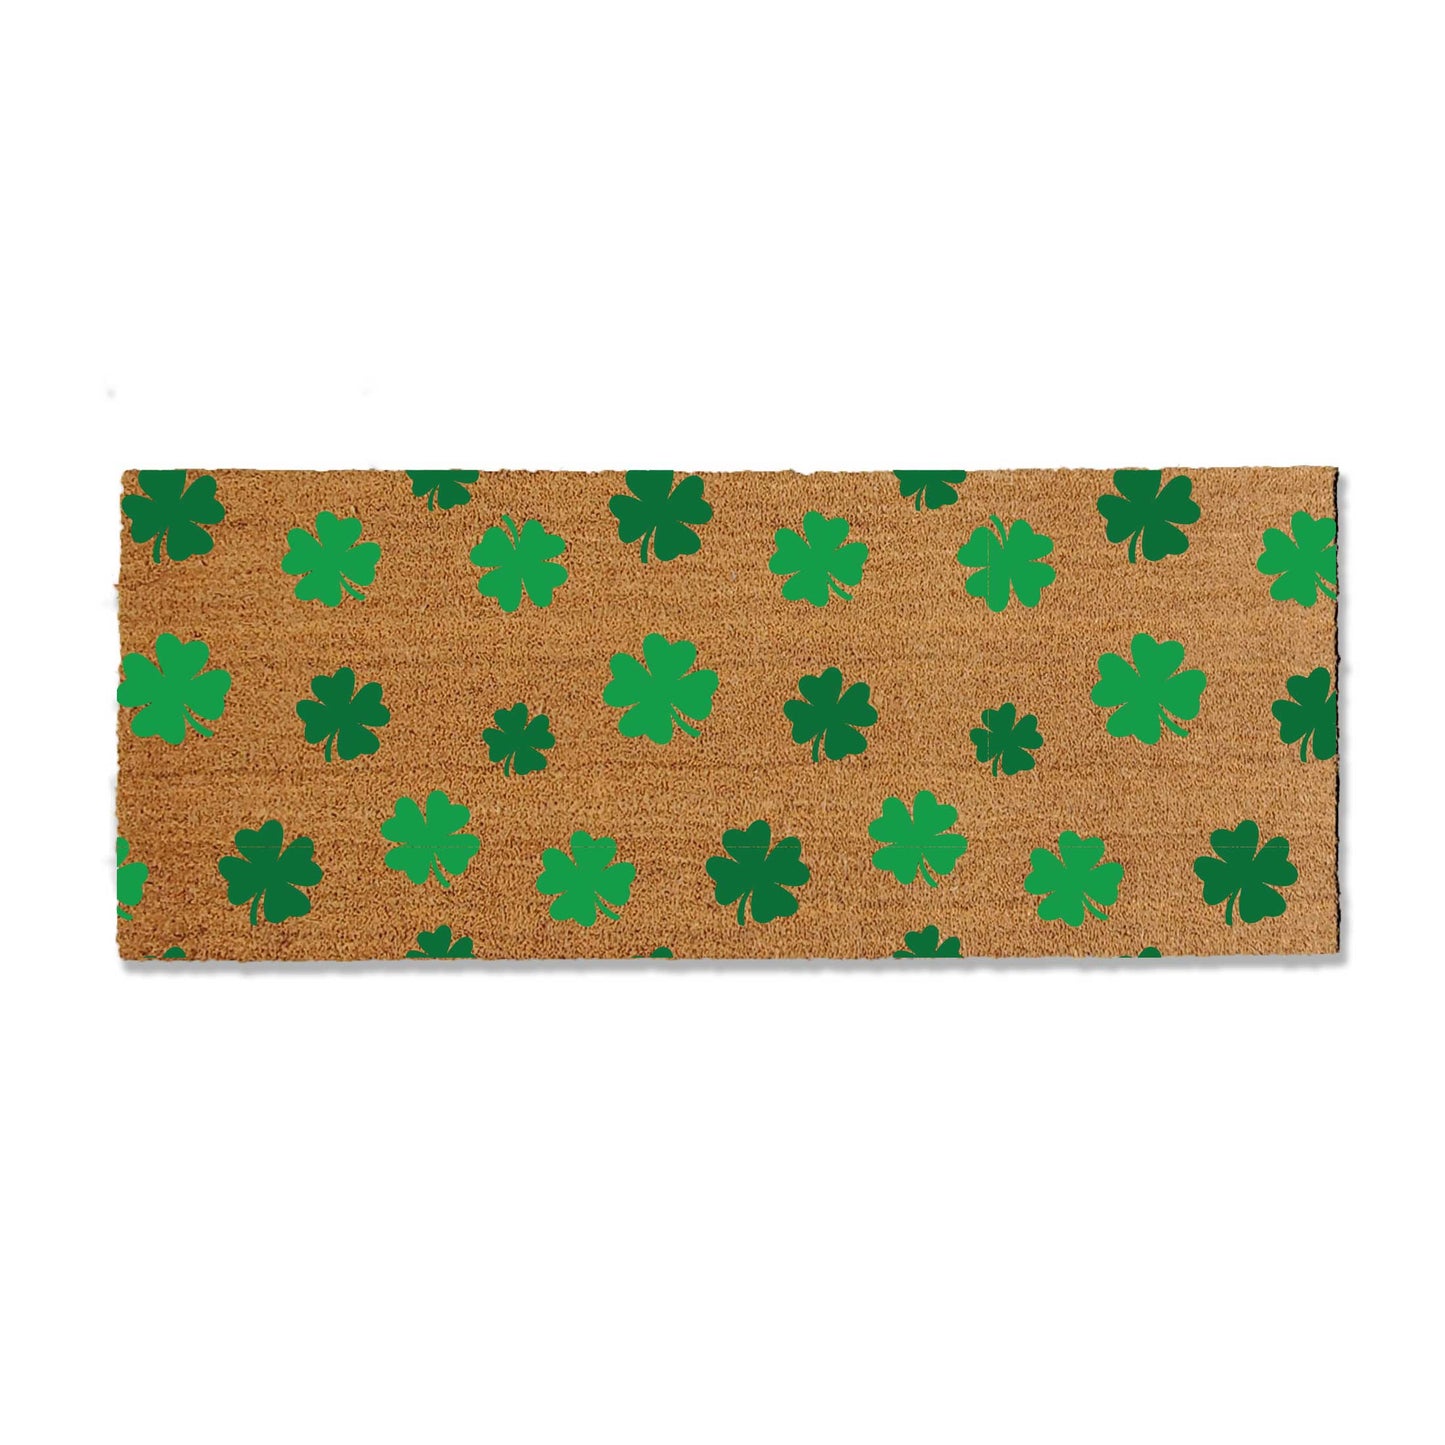 St. Patrick's Day Clover Patterned Doormat - Shamrock Doormat